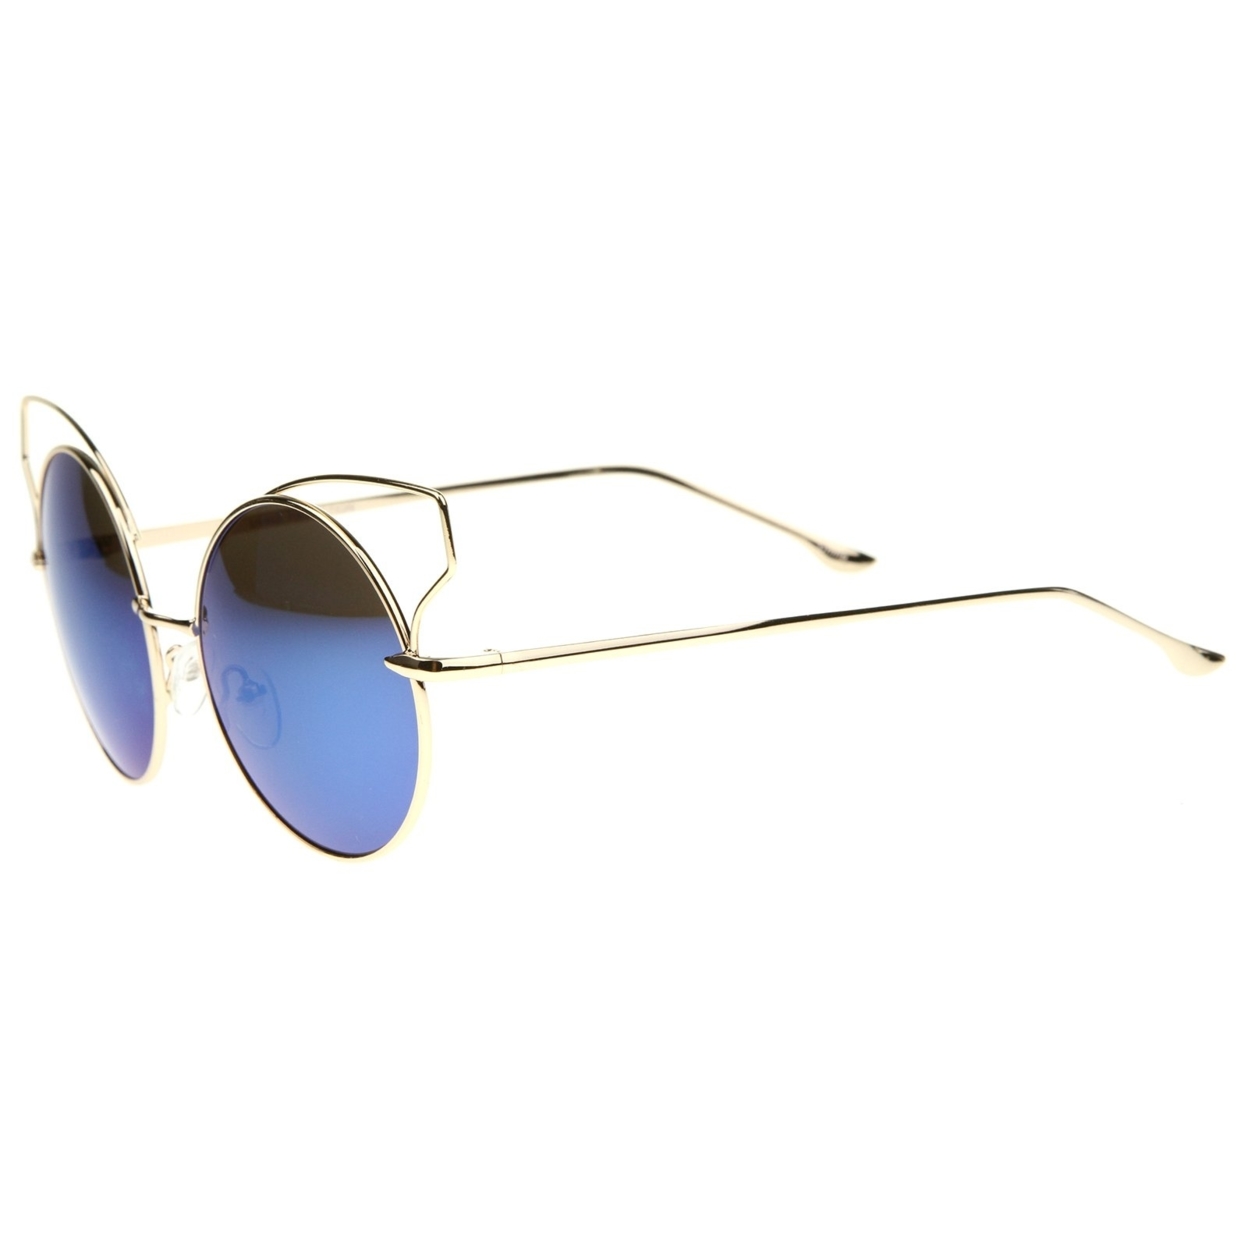 Women's Full Metal Open Design Mirrored Lens Round Cat Eye Sunglasses 55mm - Silver / Silver Mirror